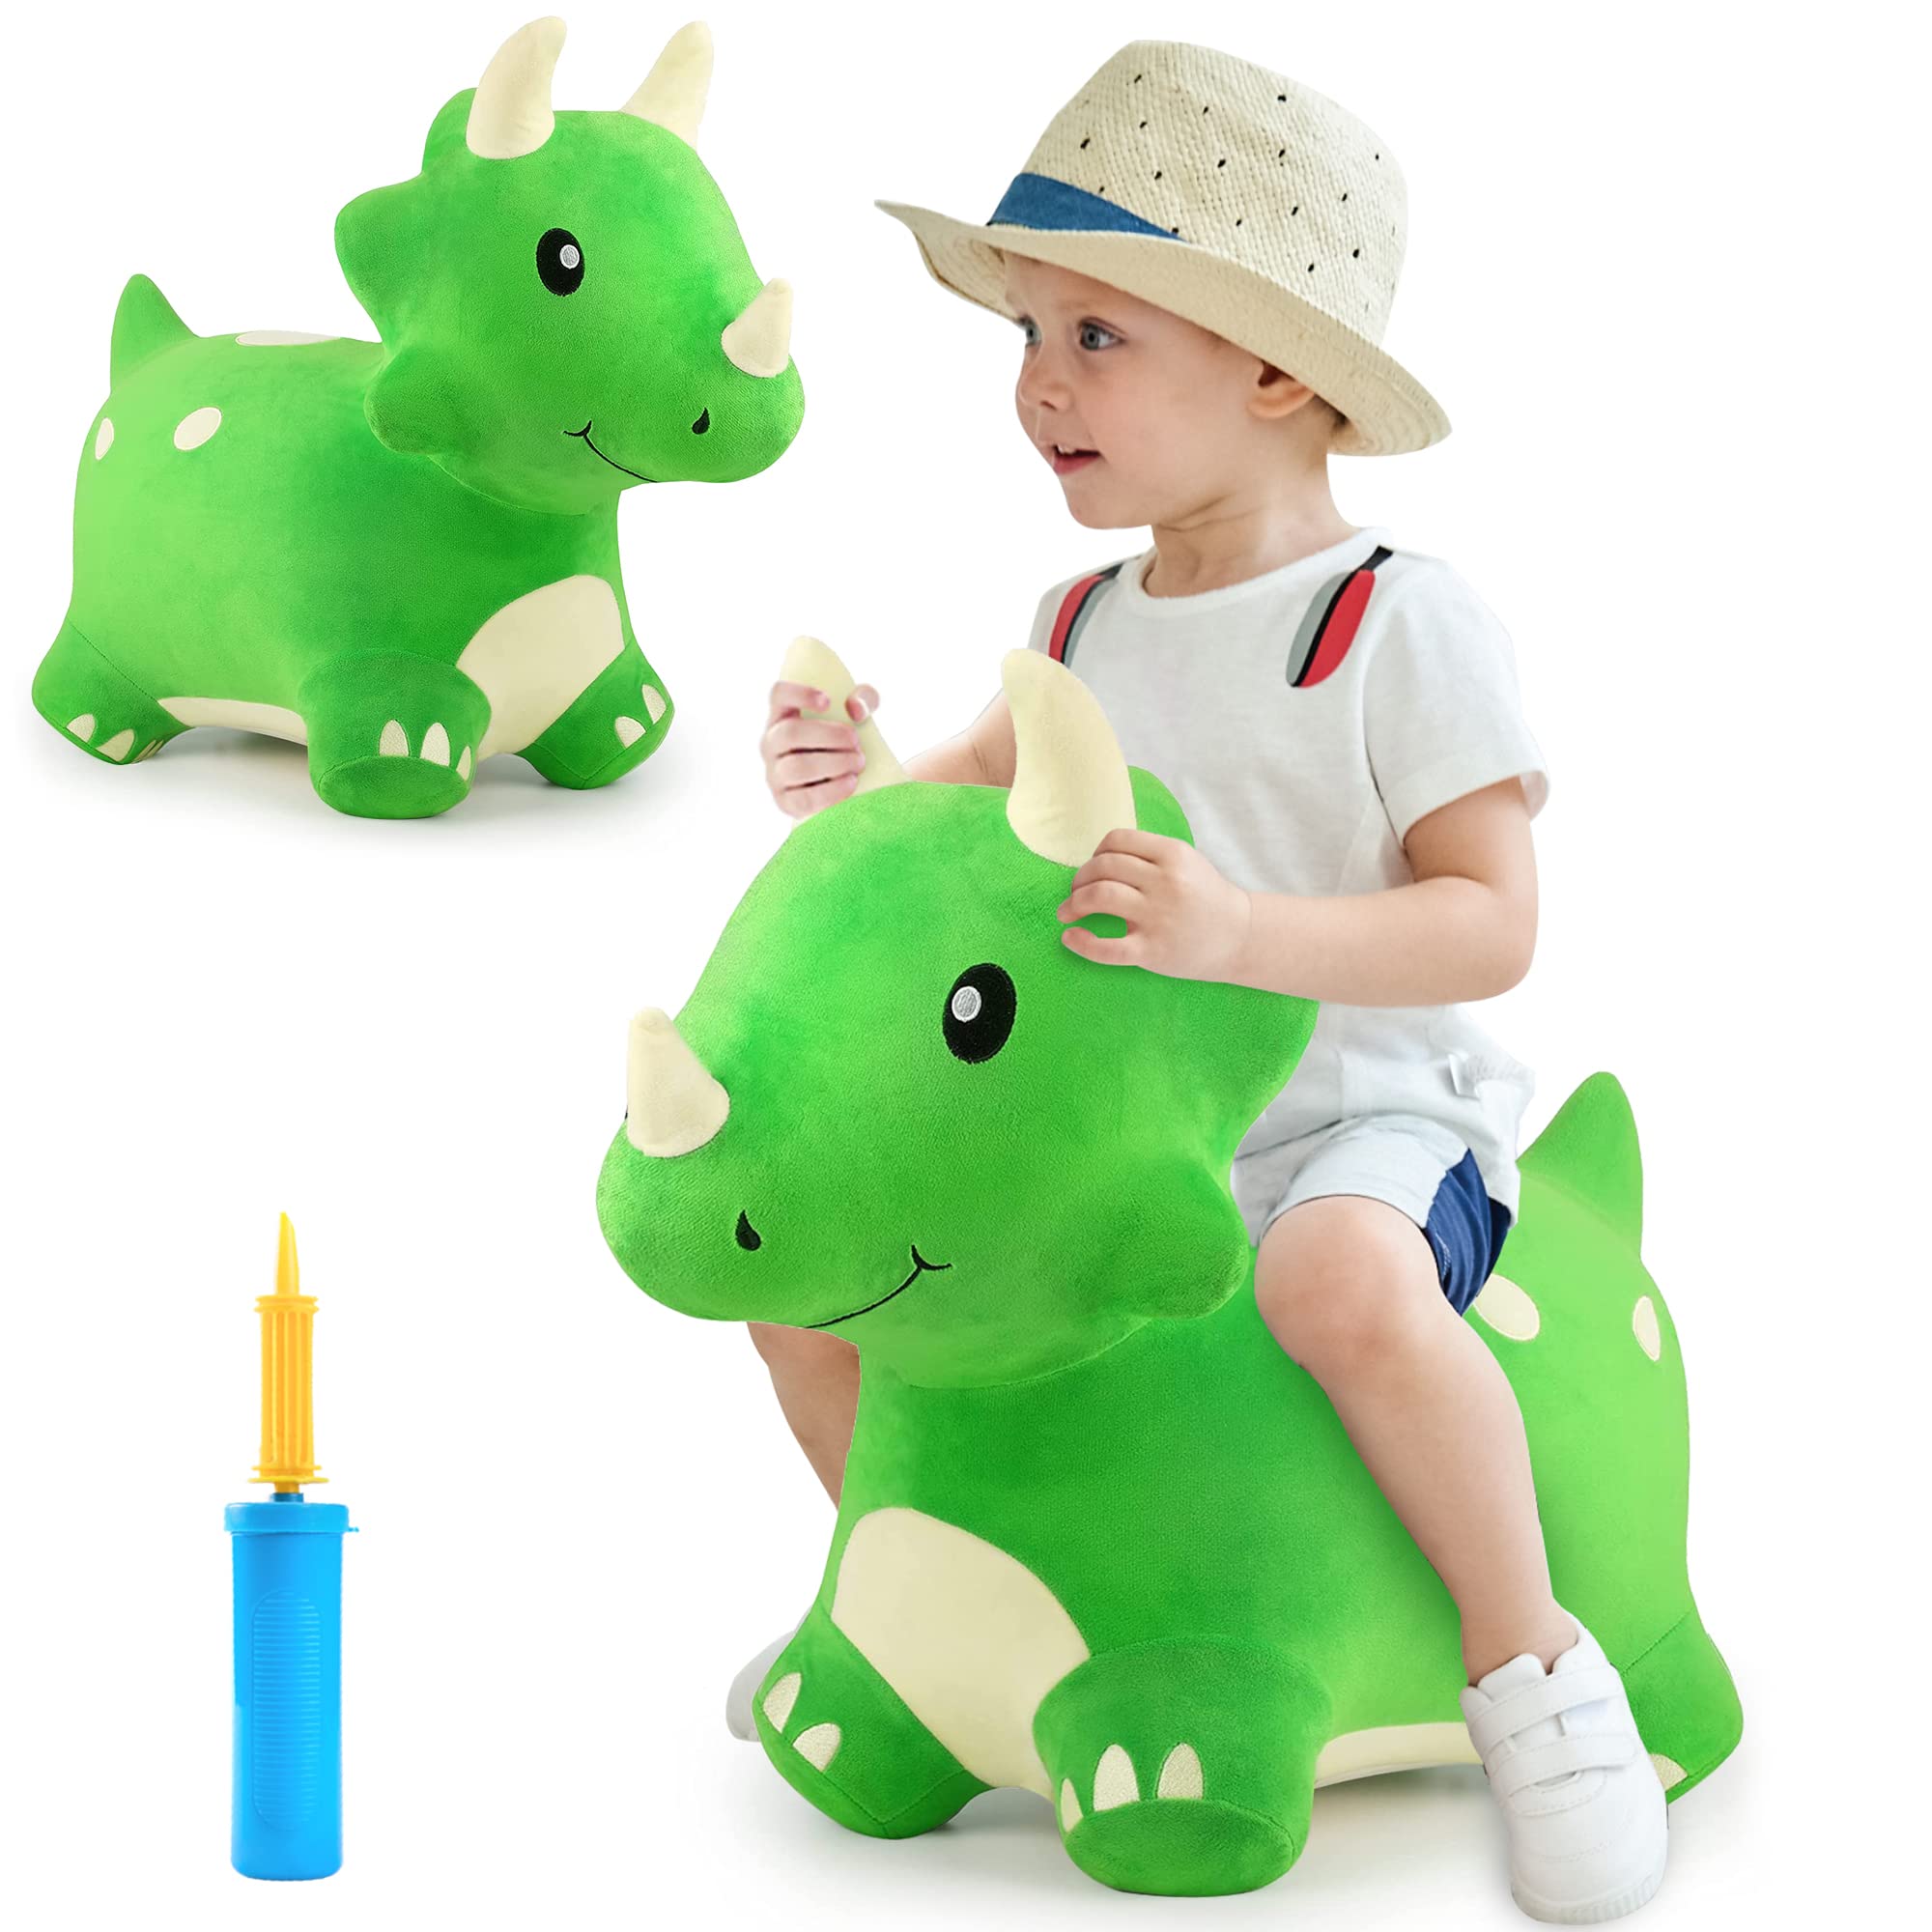 iPlay, iLearn Bouncy Pals Dinosaur Hopper Toy